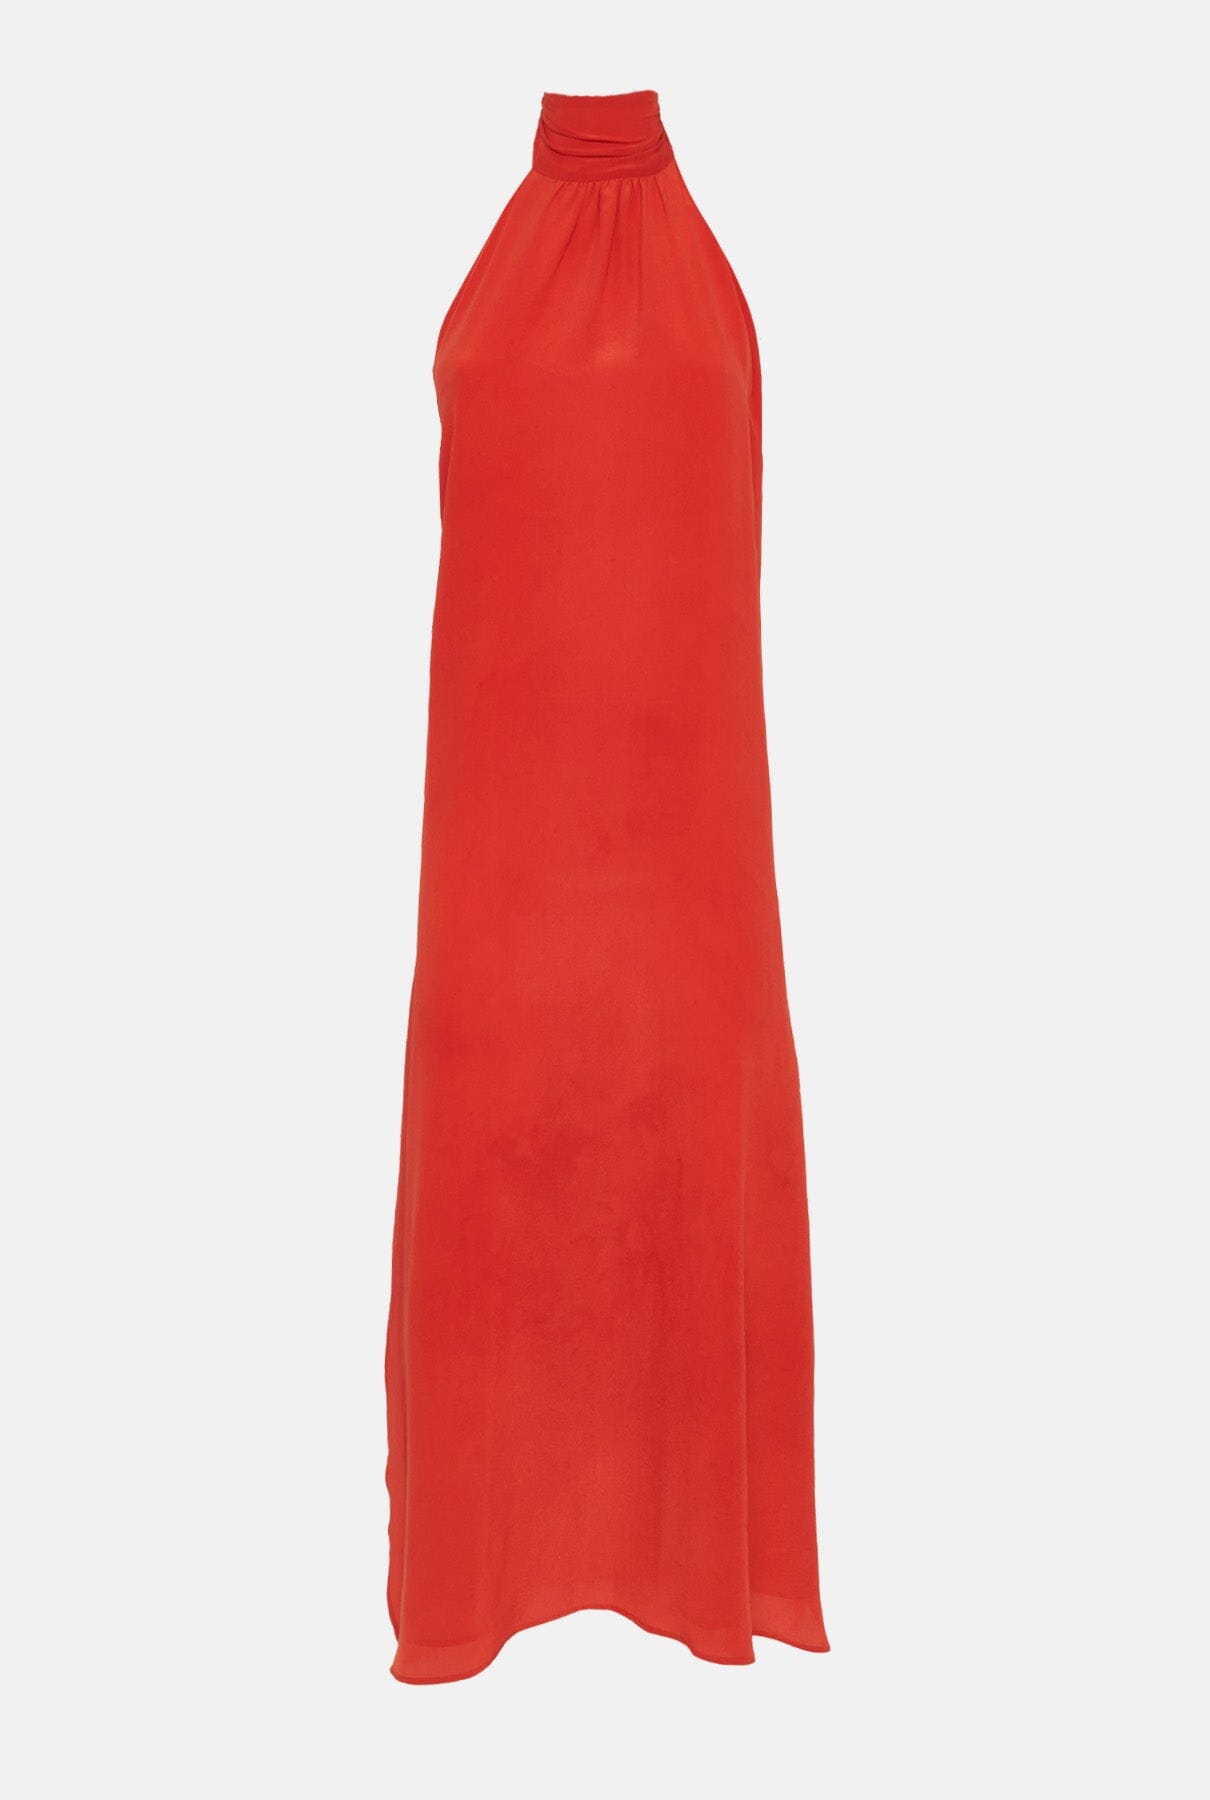 Halter Reversible Extra Long Orange/Pink Dresses Atelier Aletheia 